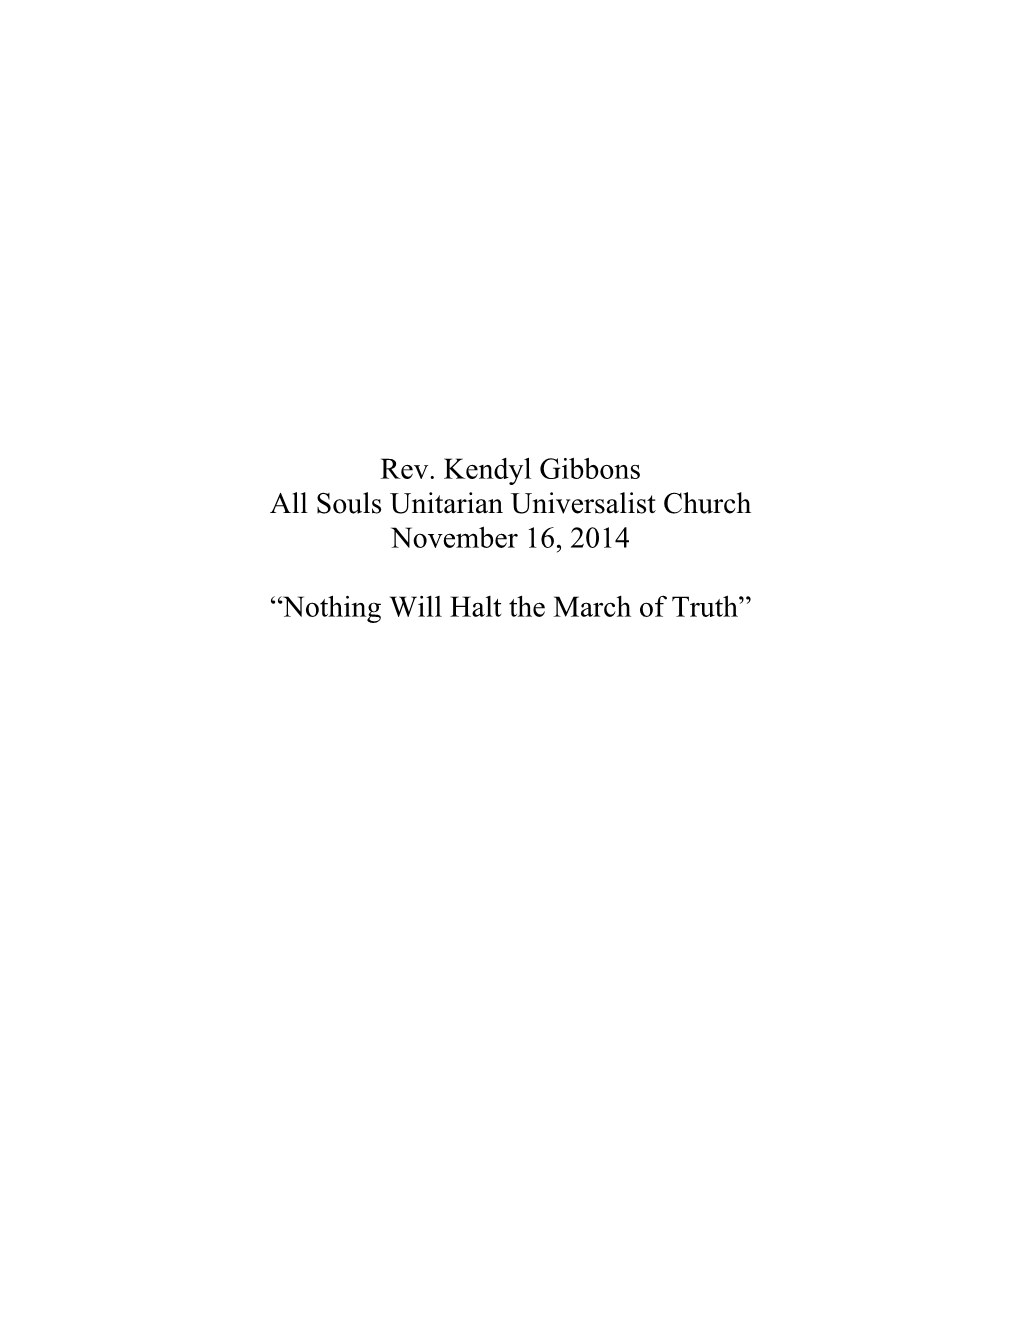 Rev. Kendyl Gibbons All Souls Unitarian Universalist Church November 16, 2014